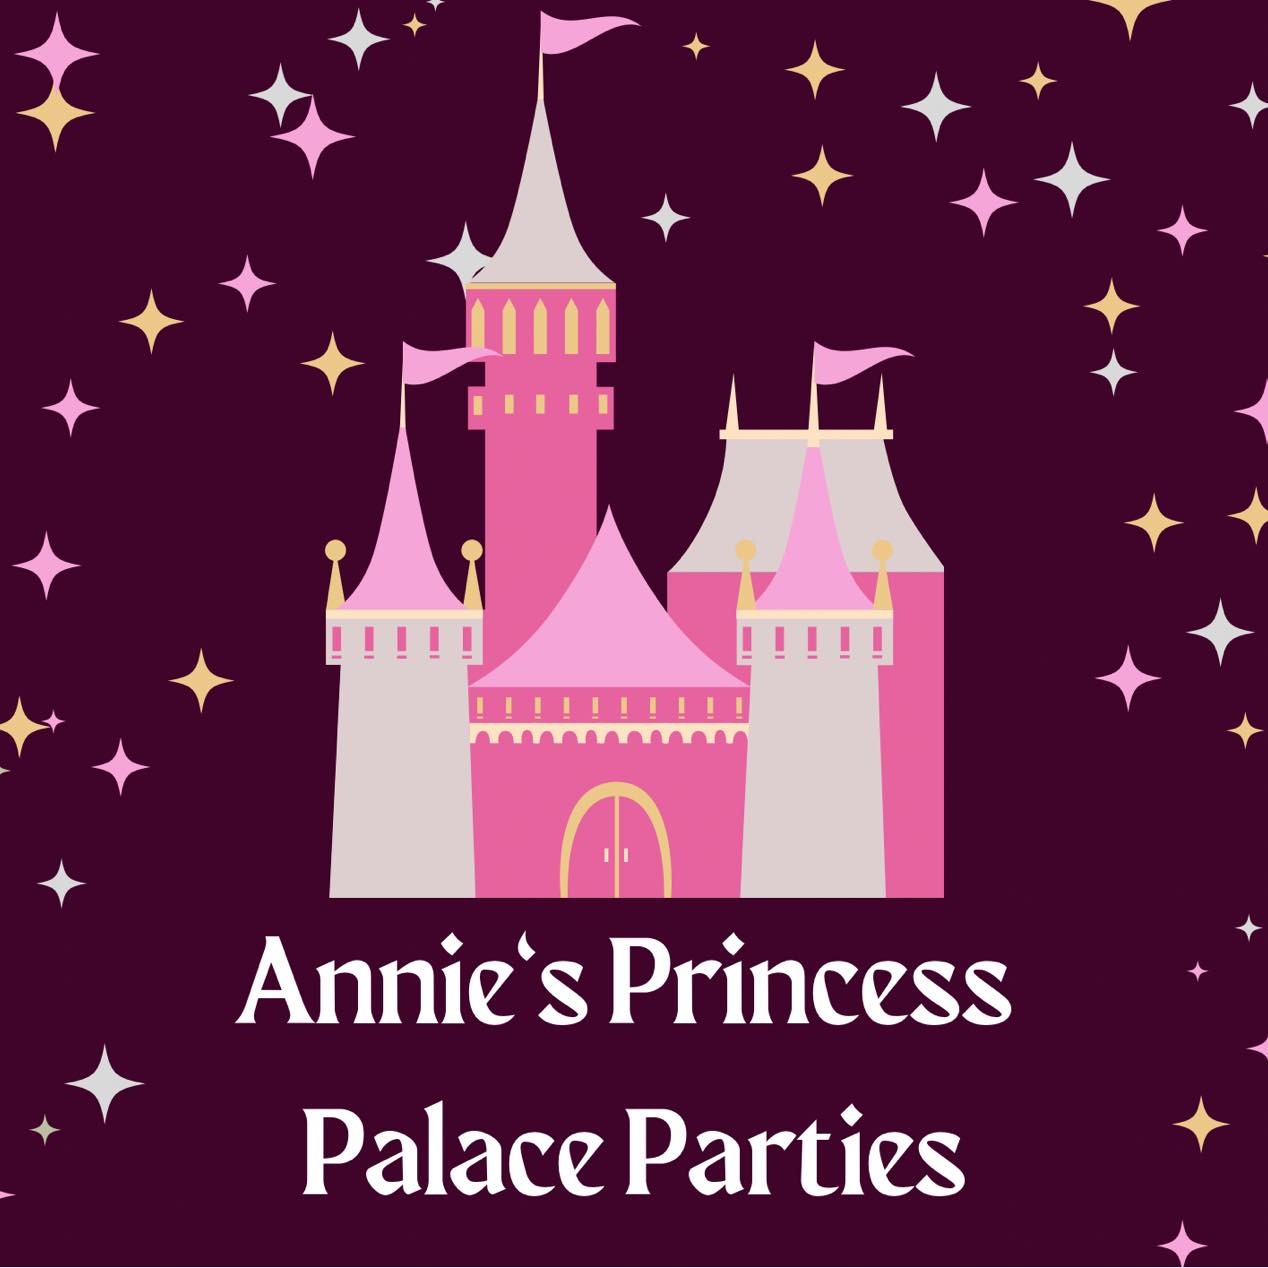 EXHIBITOR: Annie's Princess Palace Parties